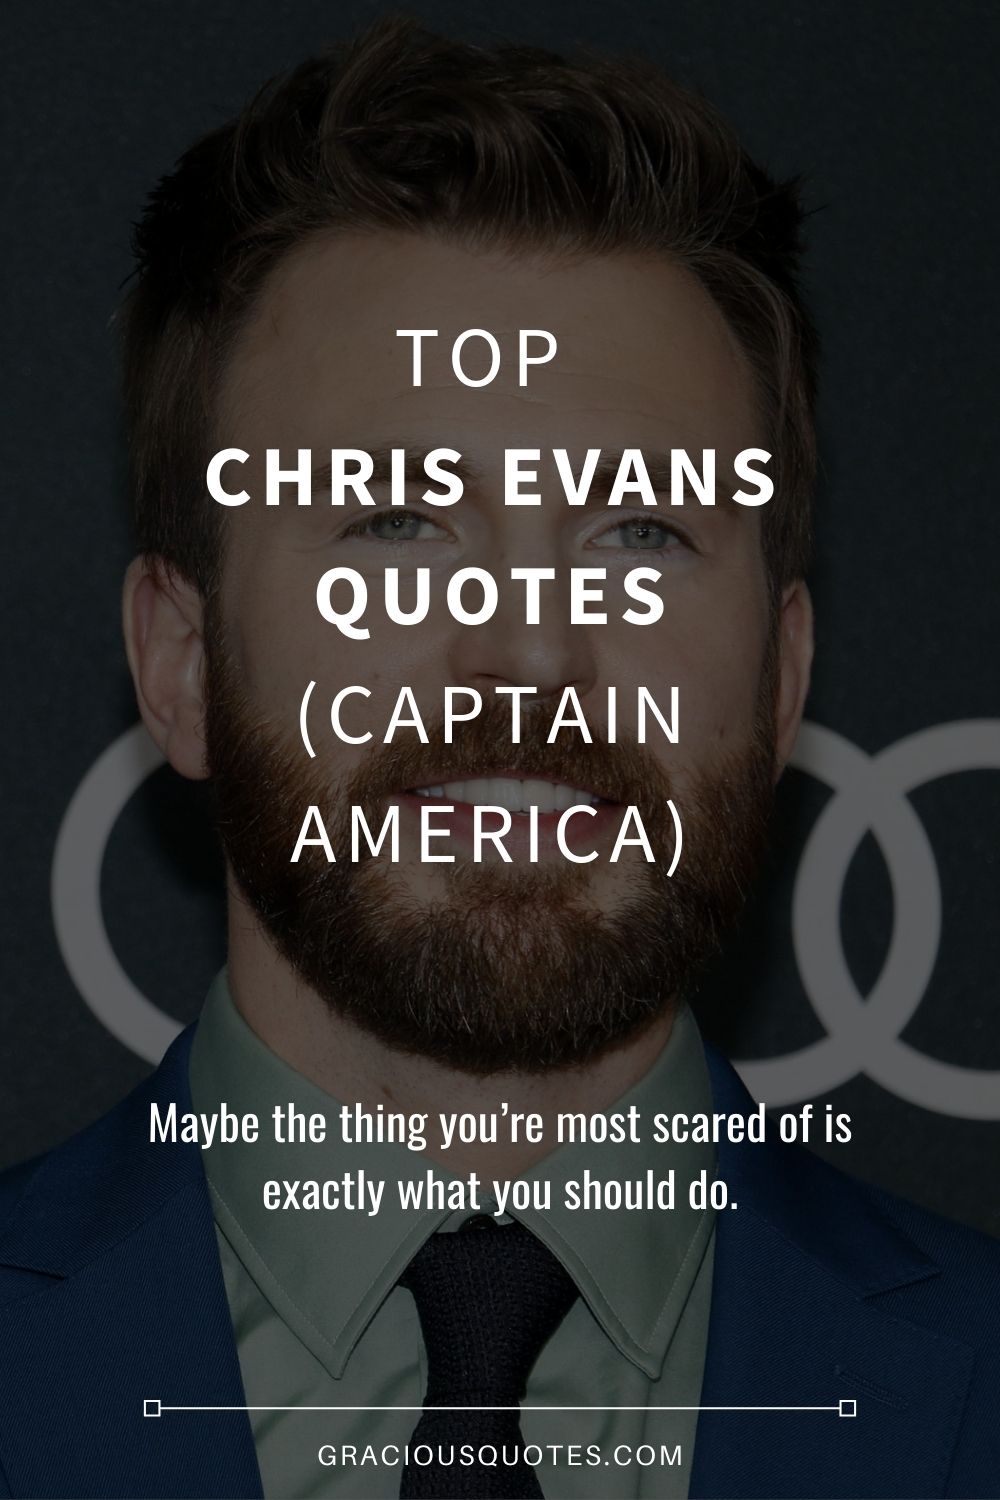 Top Chris Evans Quotes (CAPTAIN AMERICA) - Gracious Quotes (EDITED)